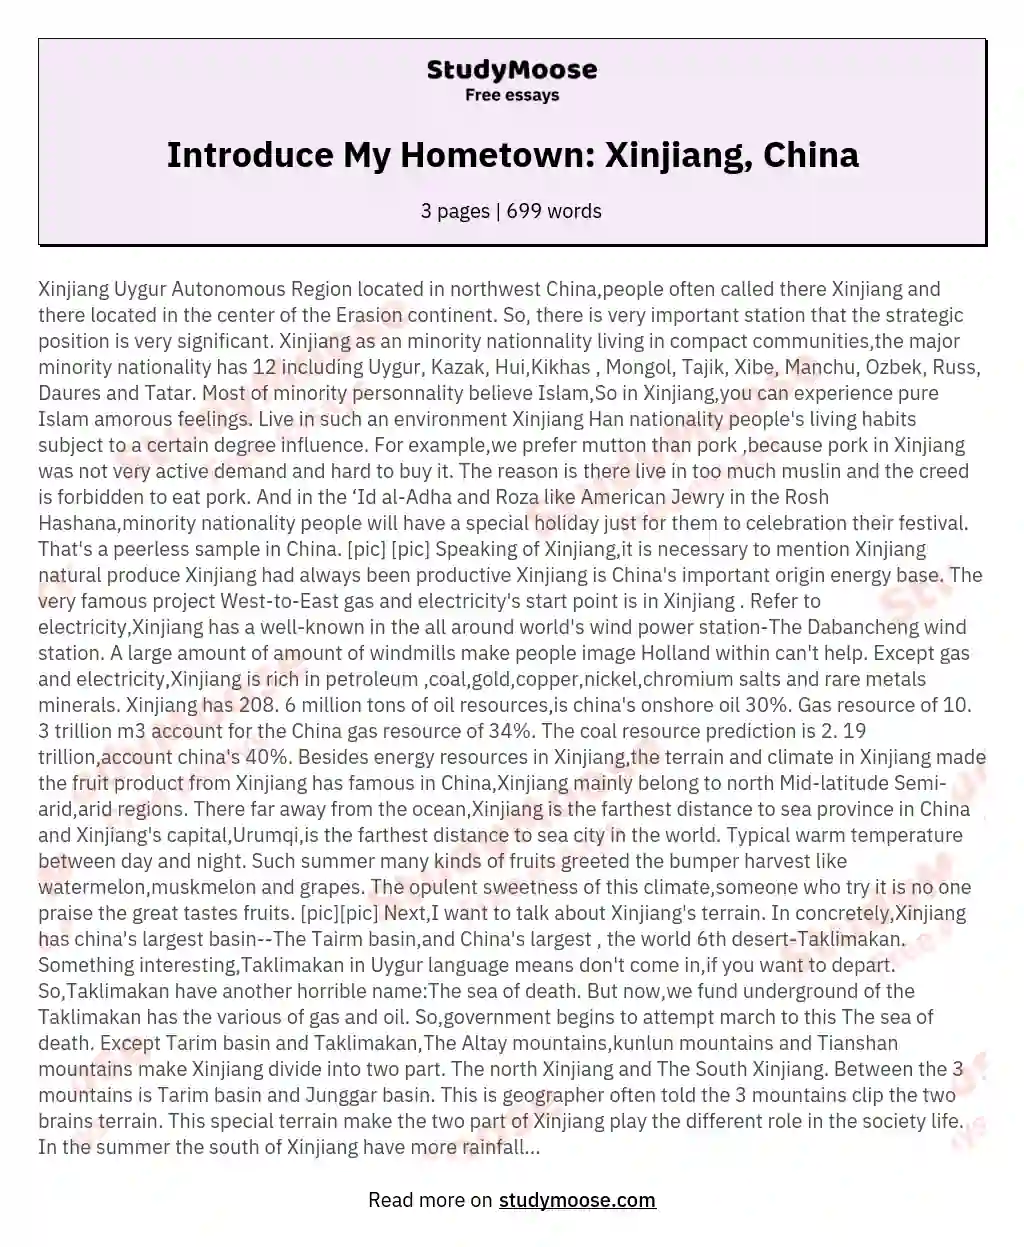 Introduce My Hometown: Xinjiang, China